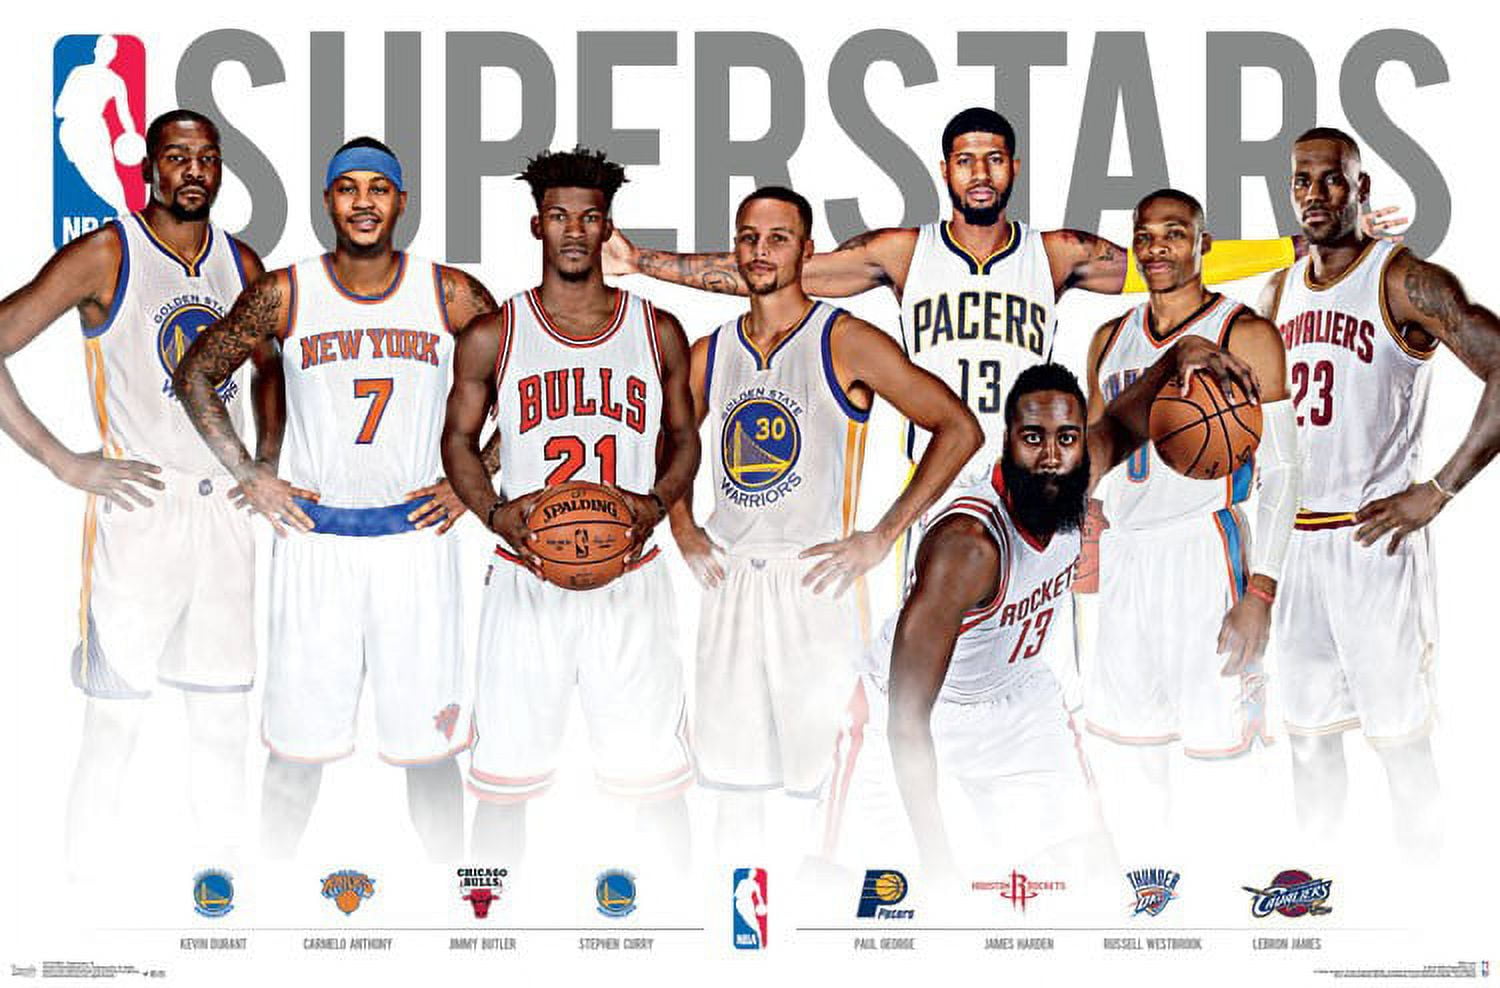 NBA League - Superstars 21, Size: 22.375 inch x 34 inch, RP21571EC